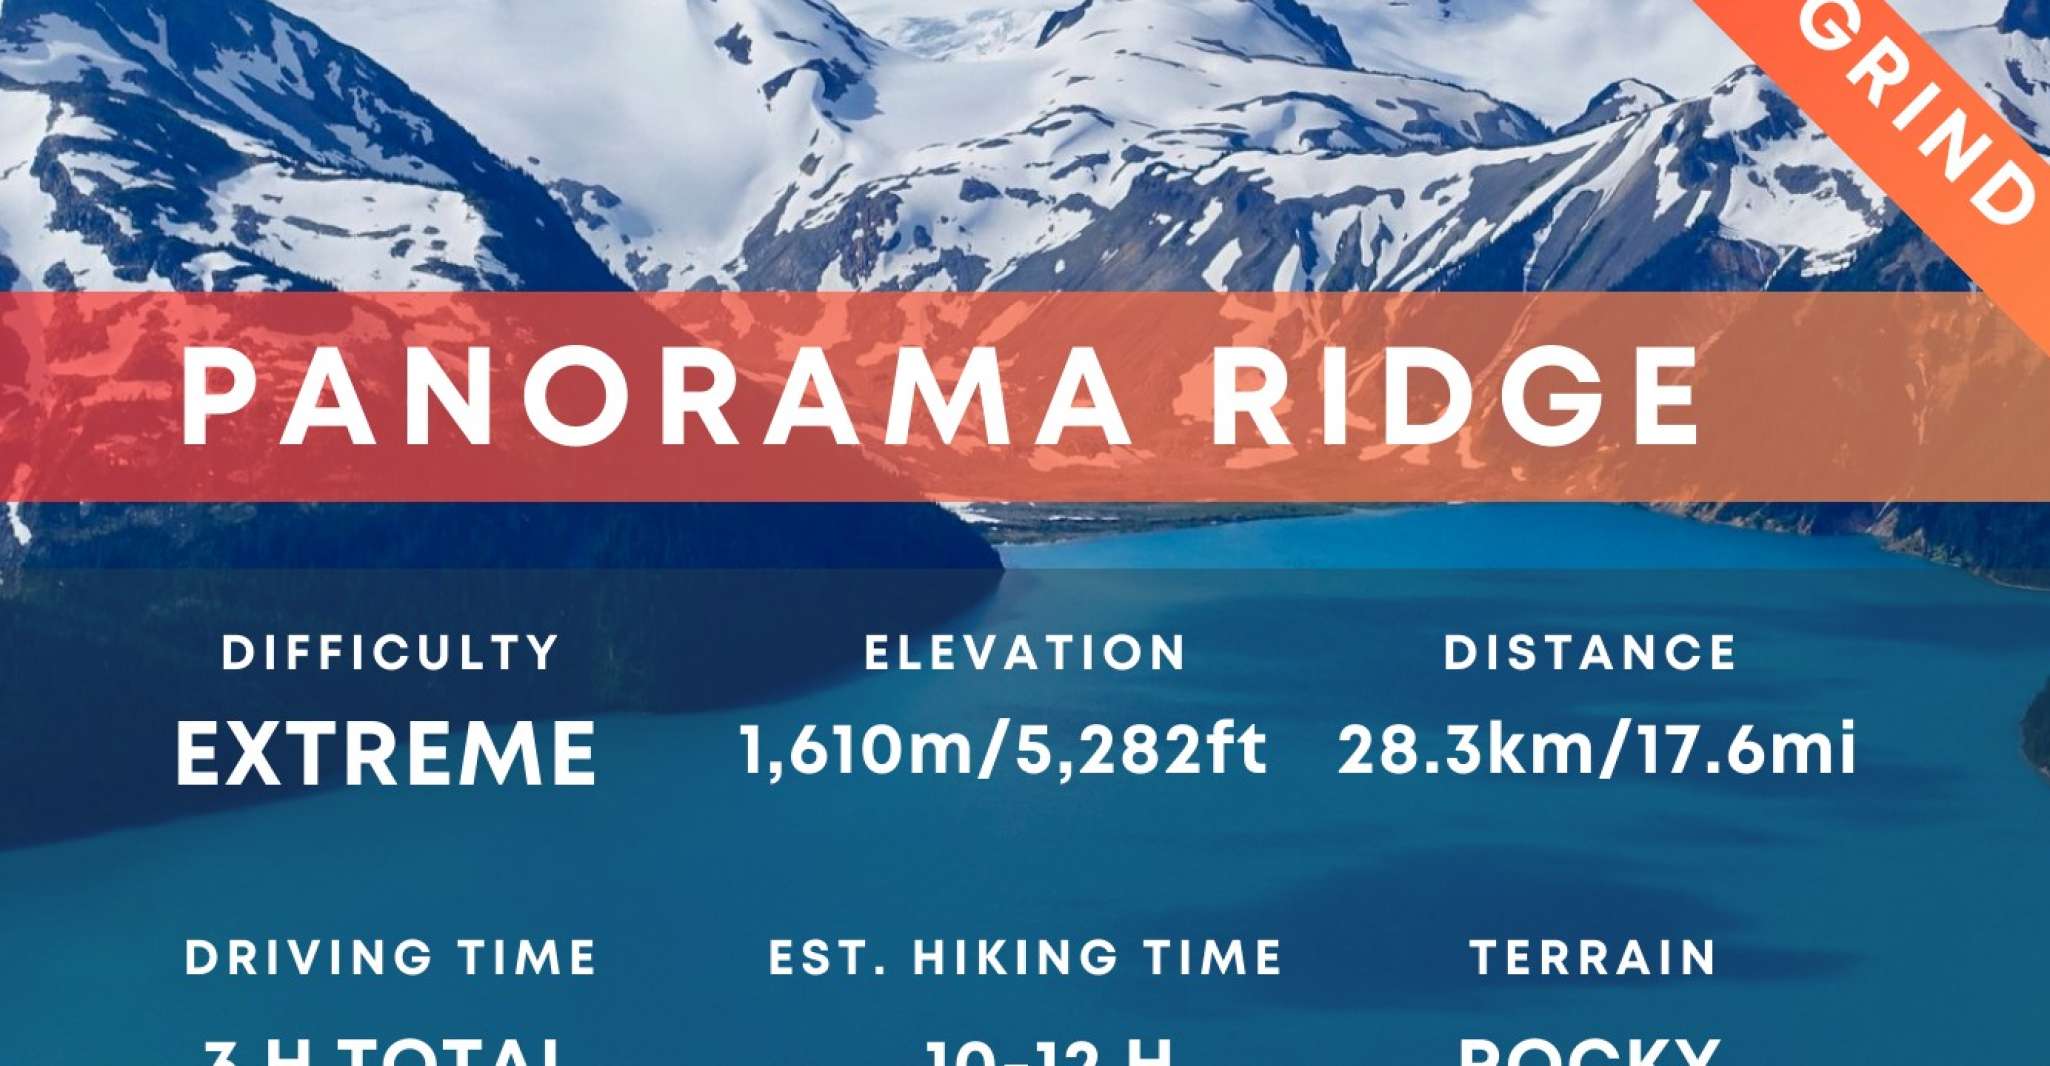 Garibaldi & Panorama Ridge Hiking Day Trip | All-inclusive - Housity